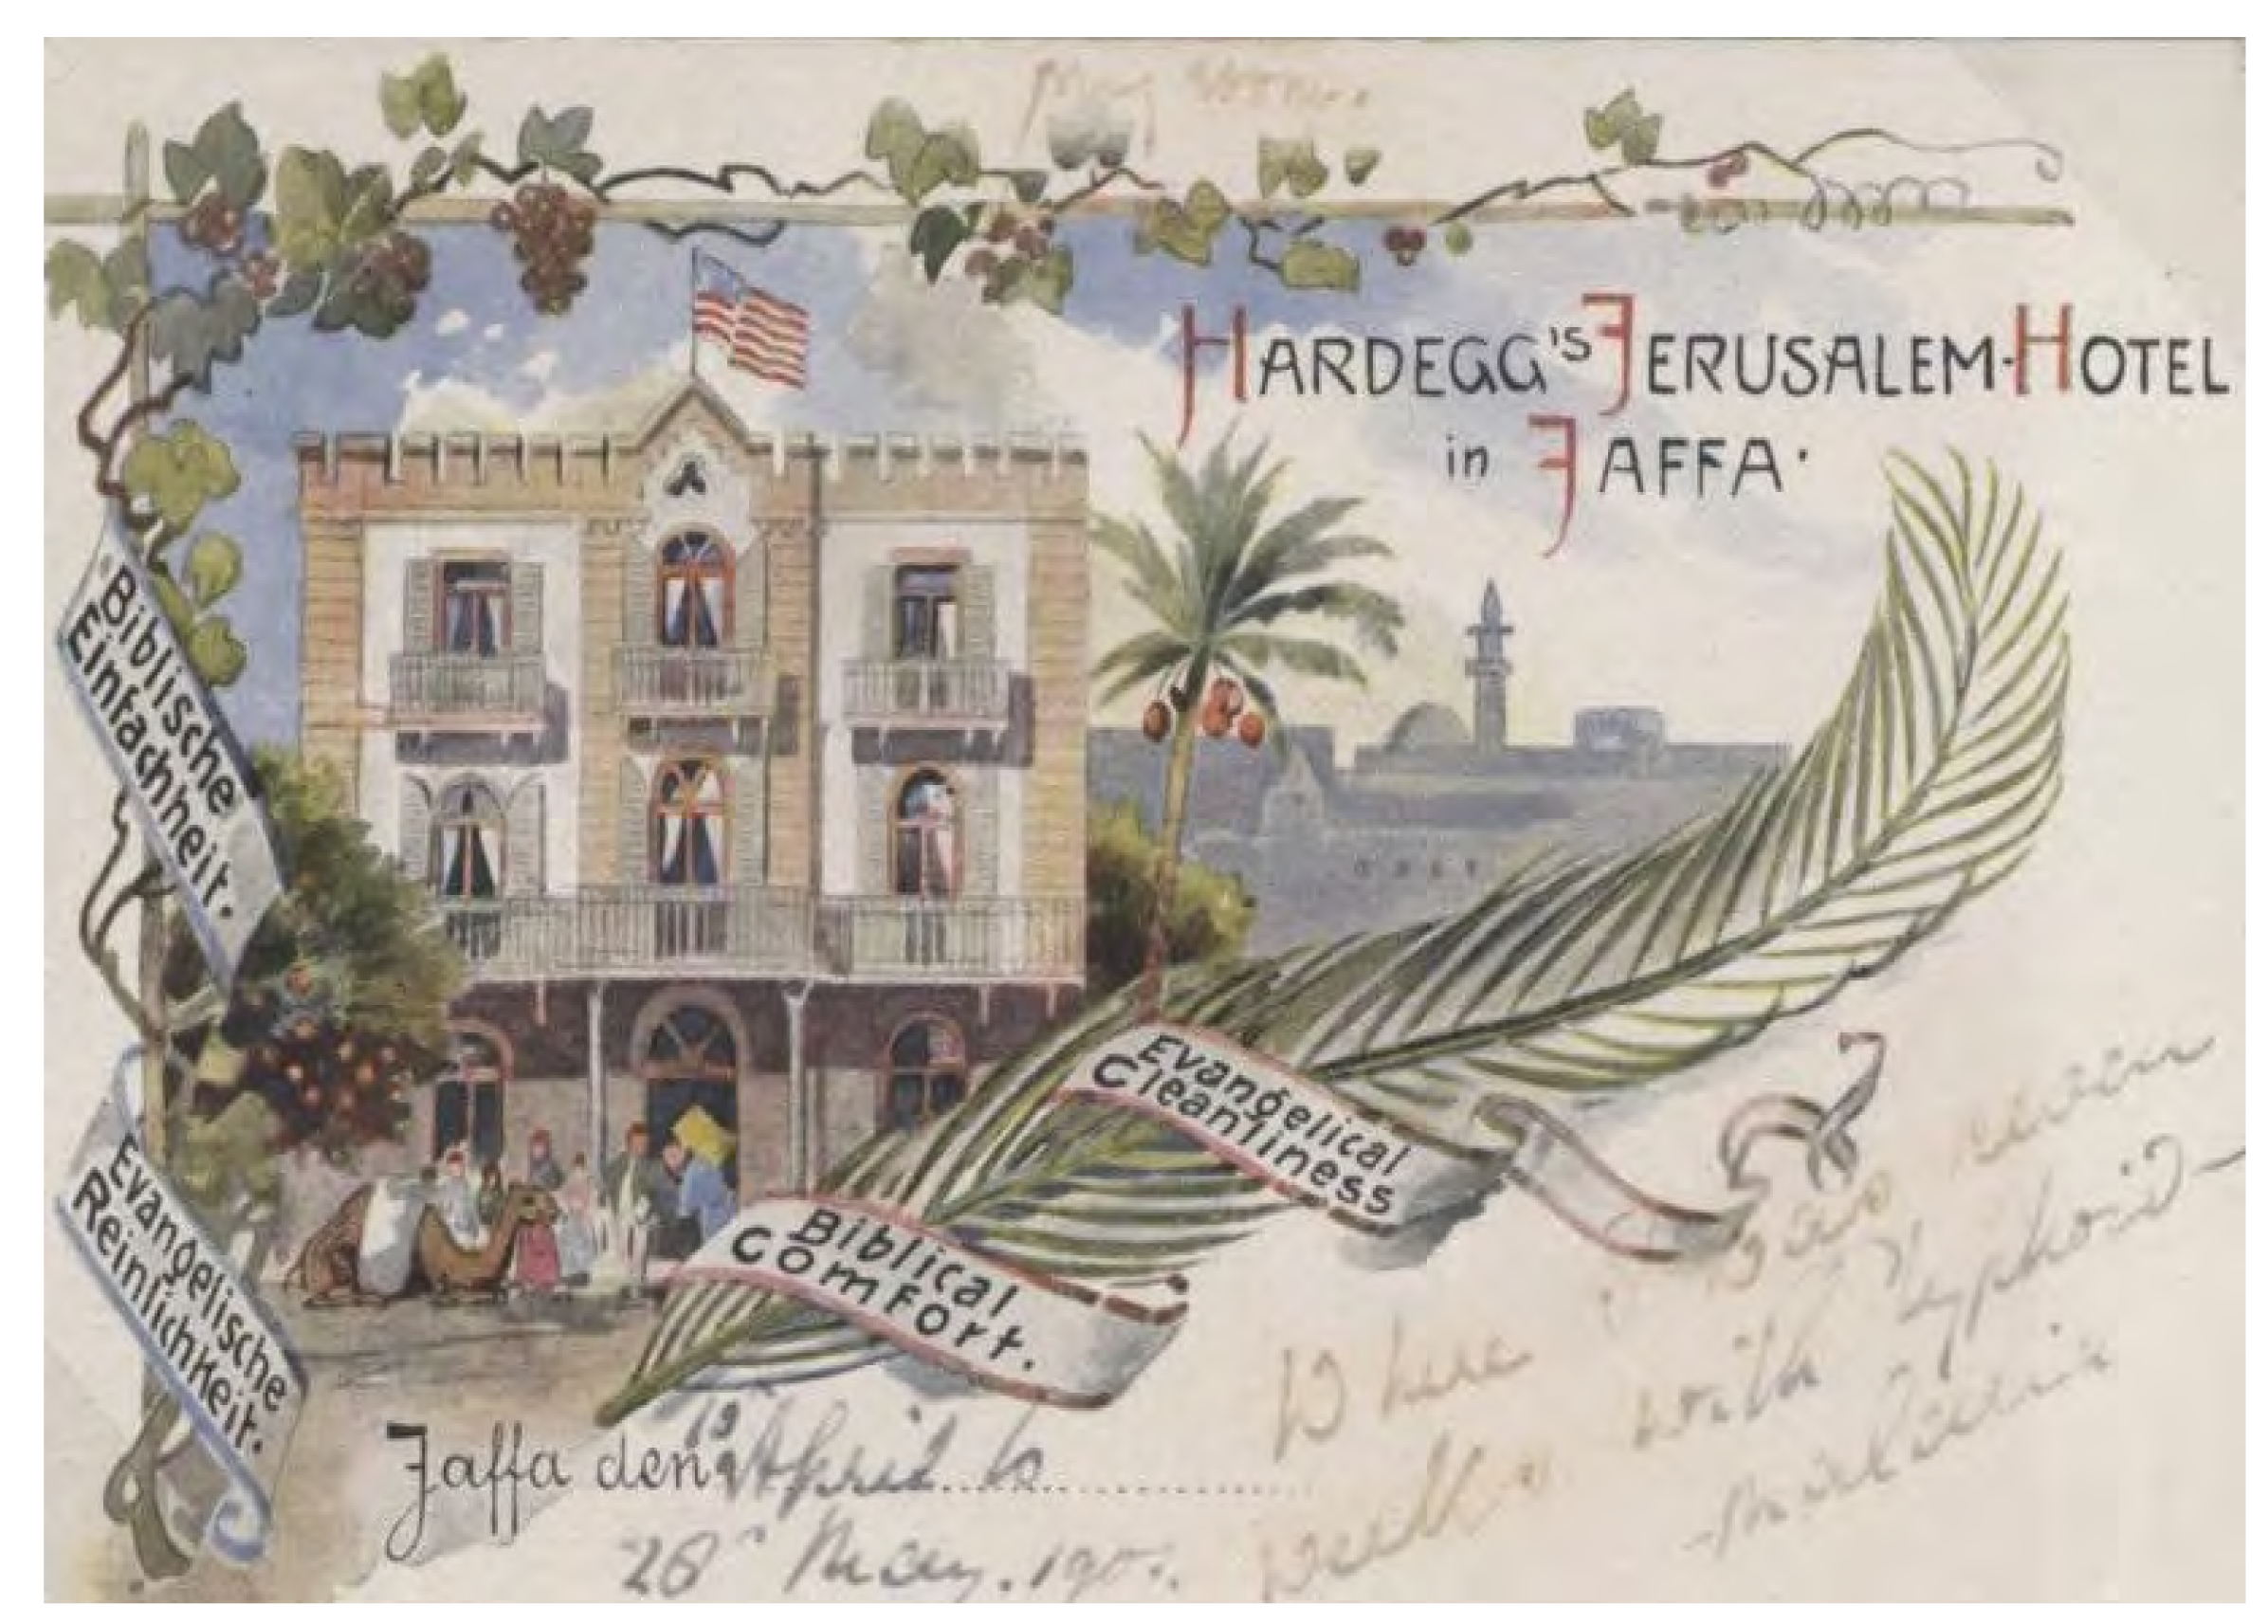 Hardegg's Jerusalem Hotel Historical